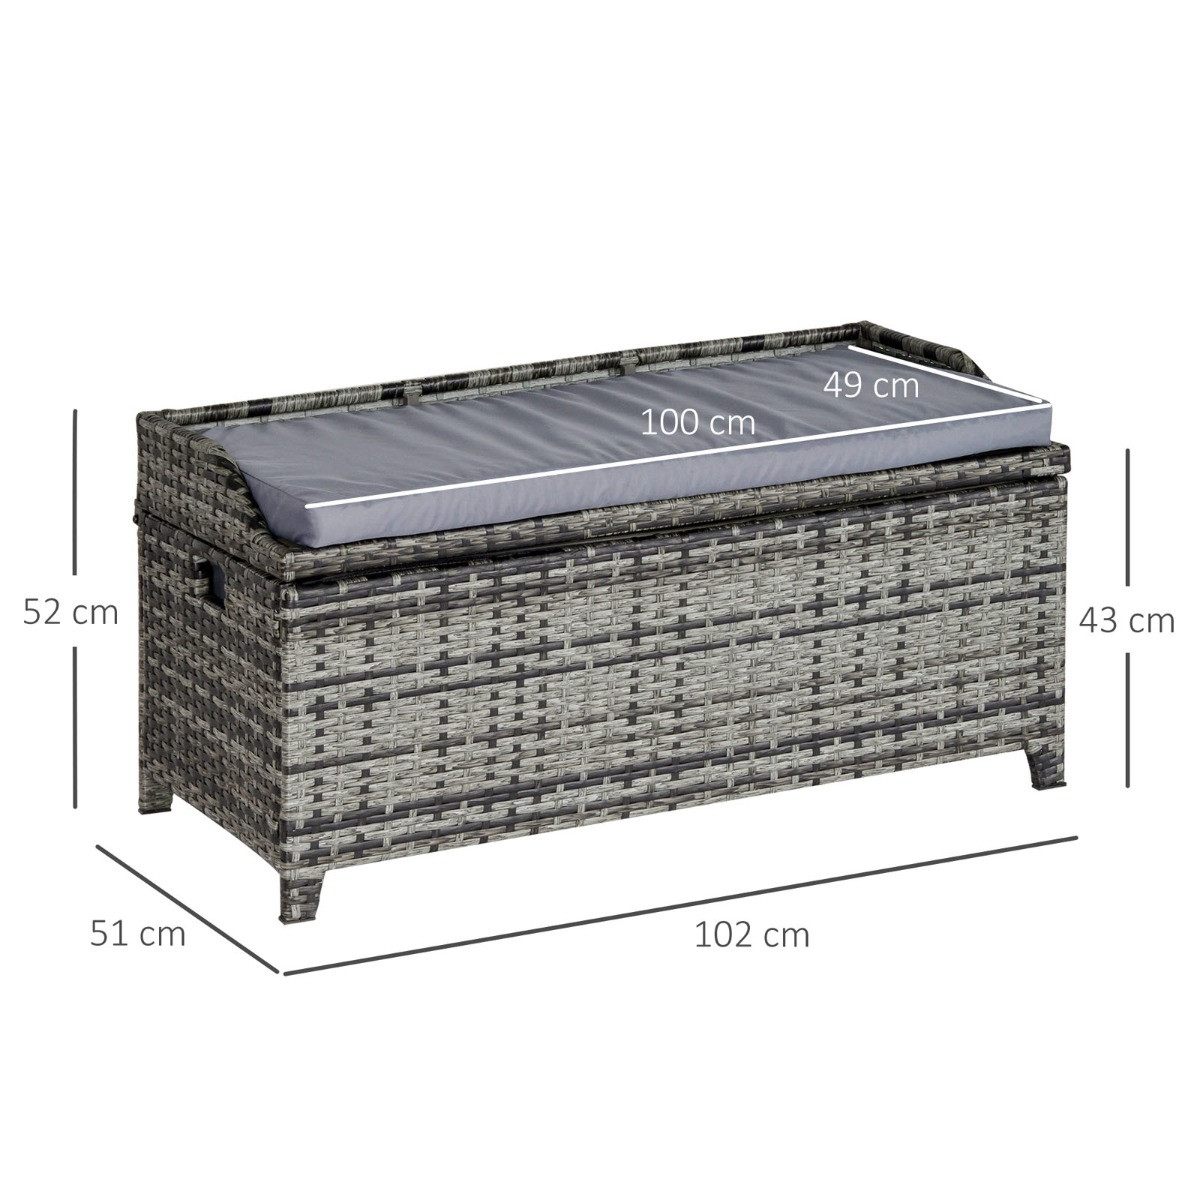 Outsunny Wicker Rattan Storage Box Seat With Cushion - Grey>